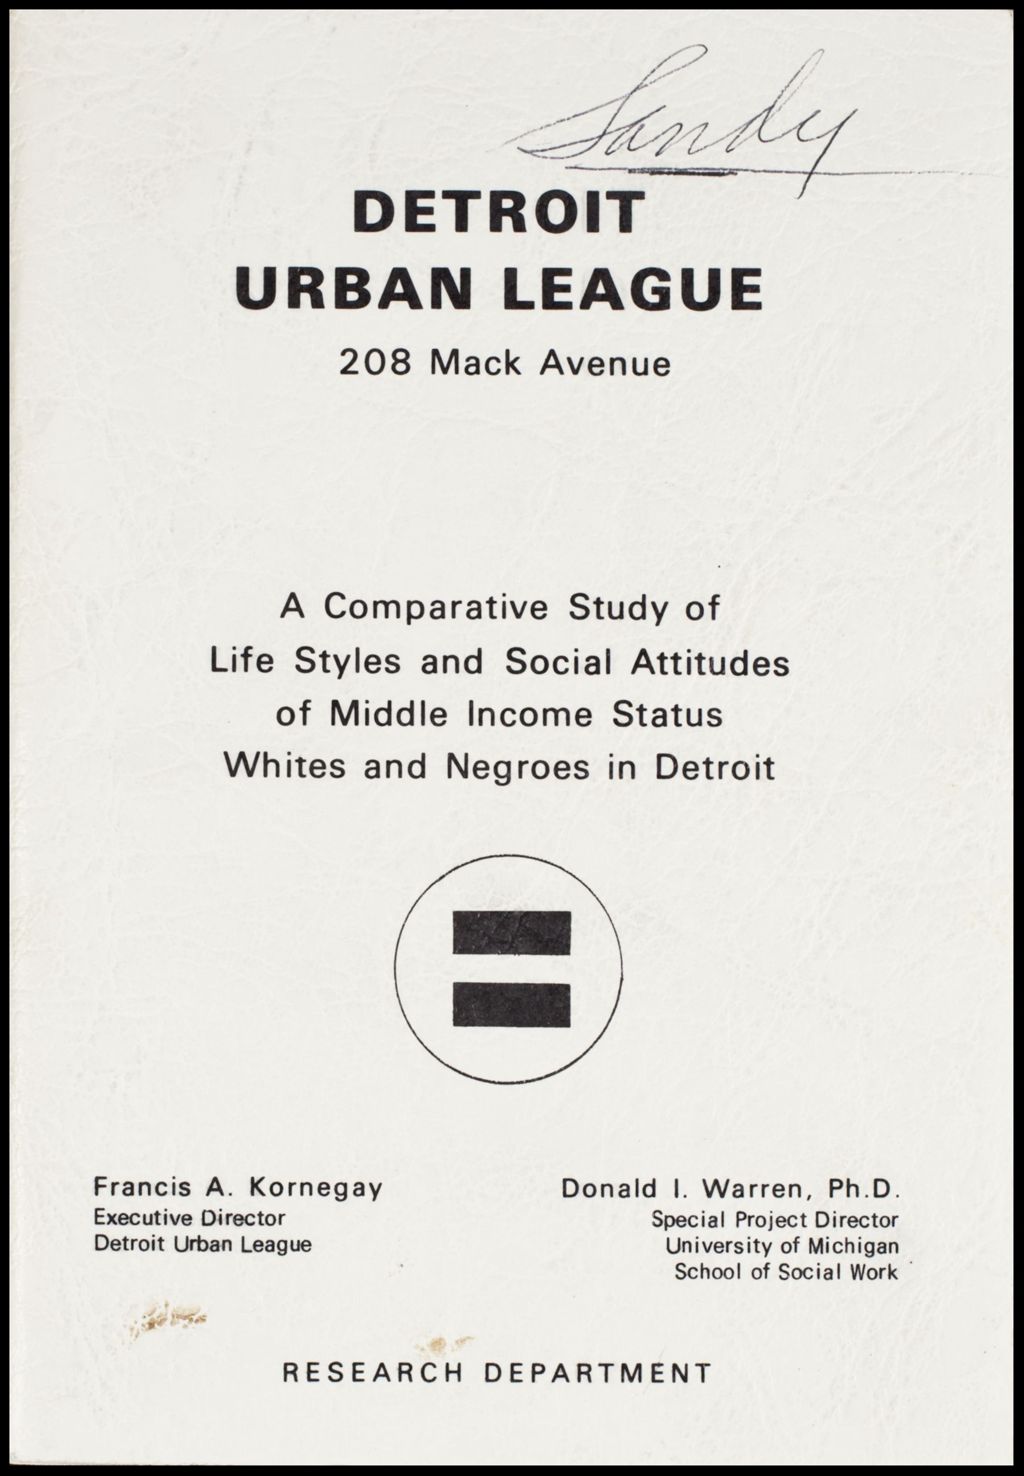 Miniature of CUL Report The Web of Racism, 1968 (Folder III-2485)